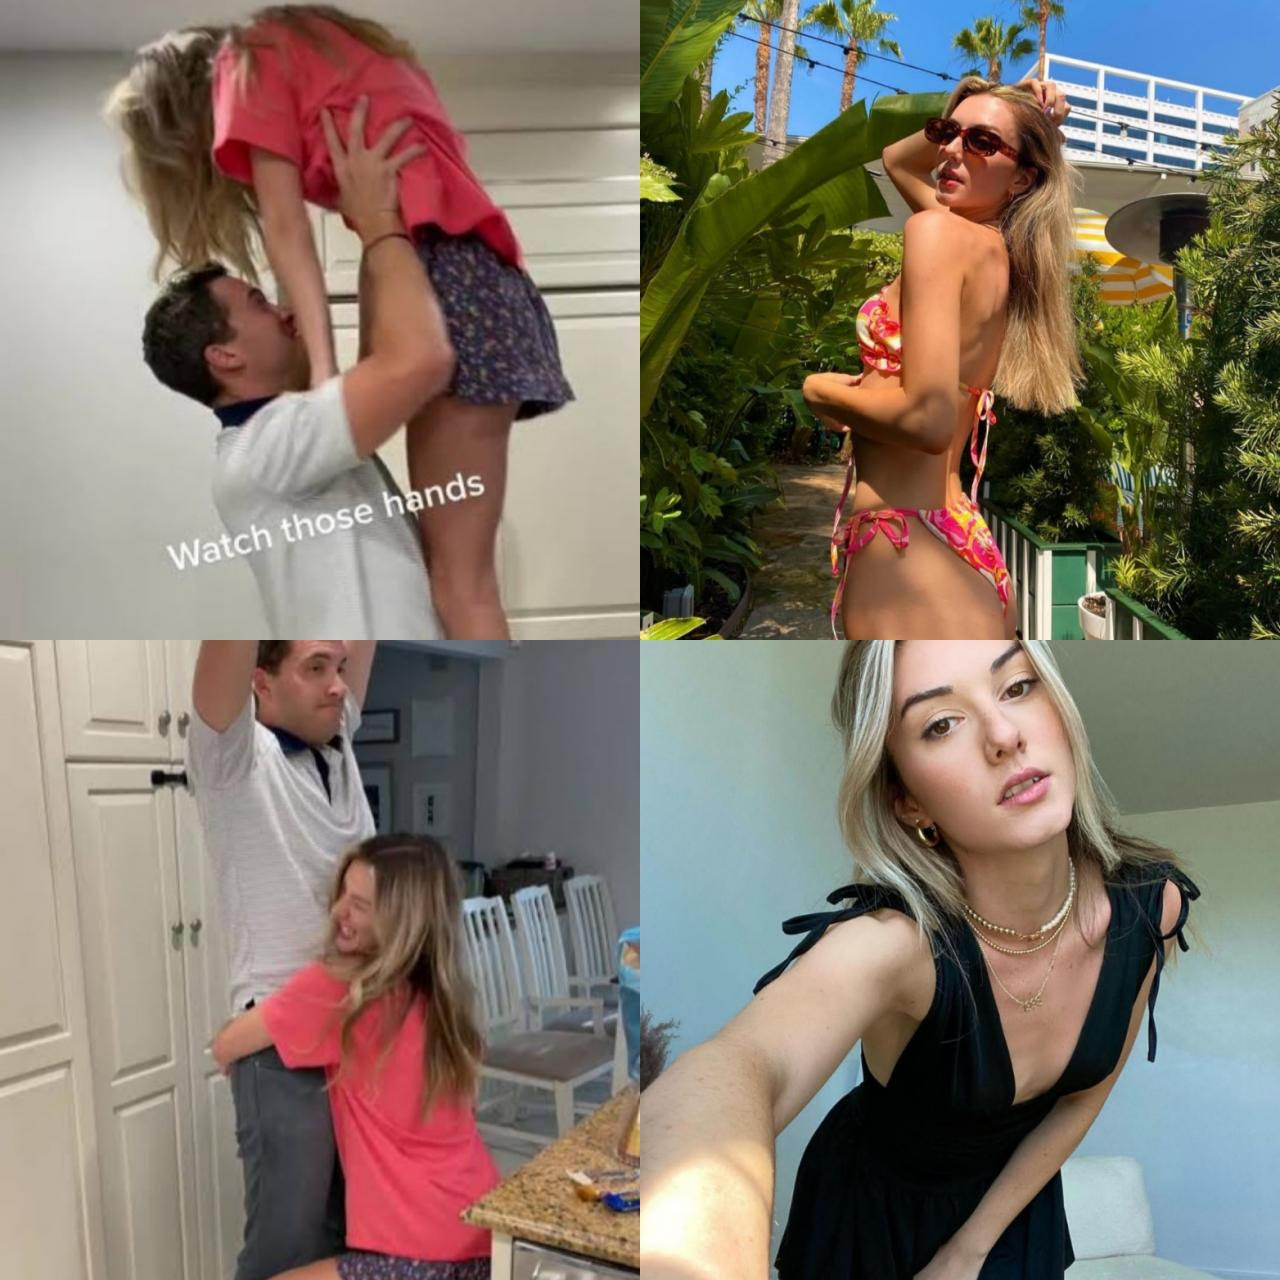 Hot photos of the nanny filmed 